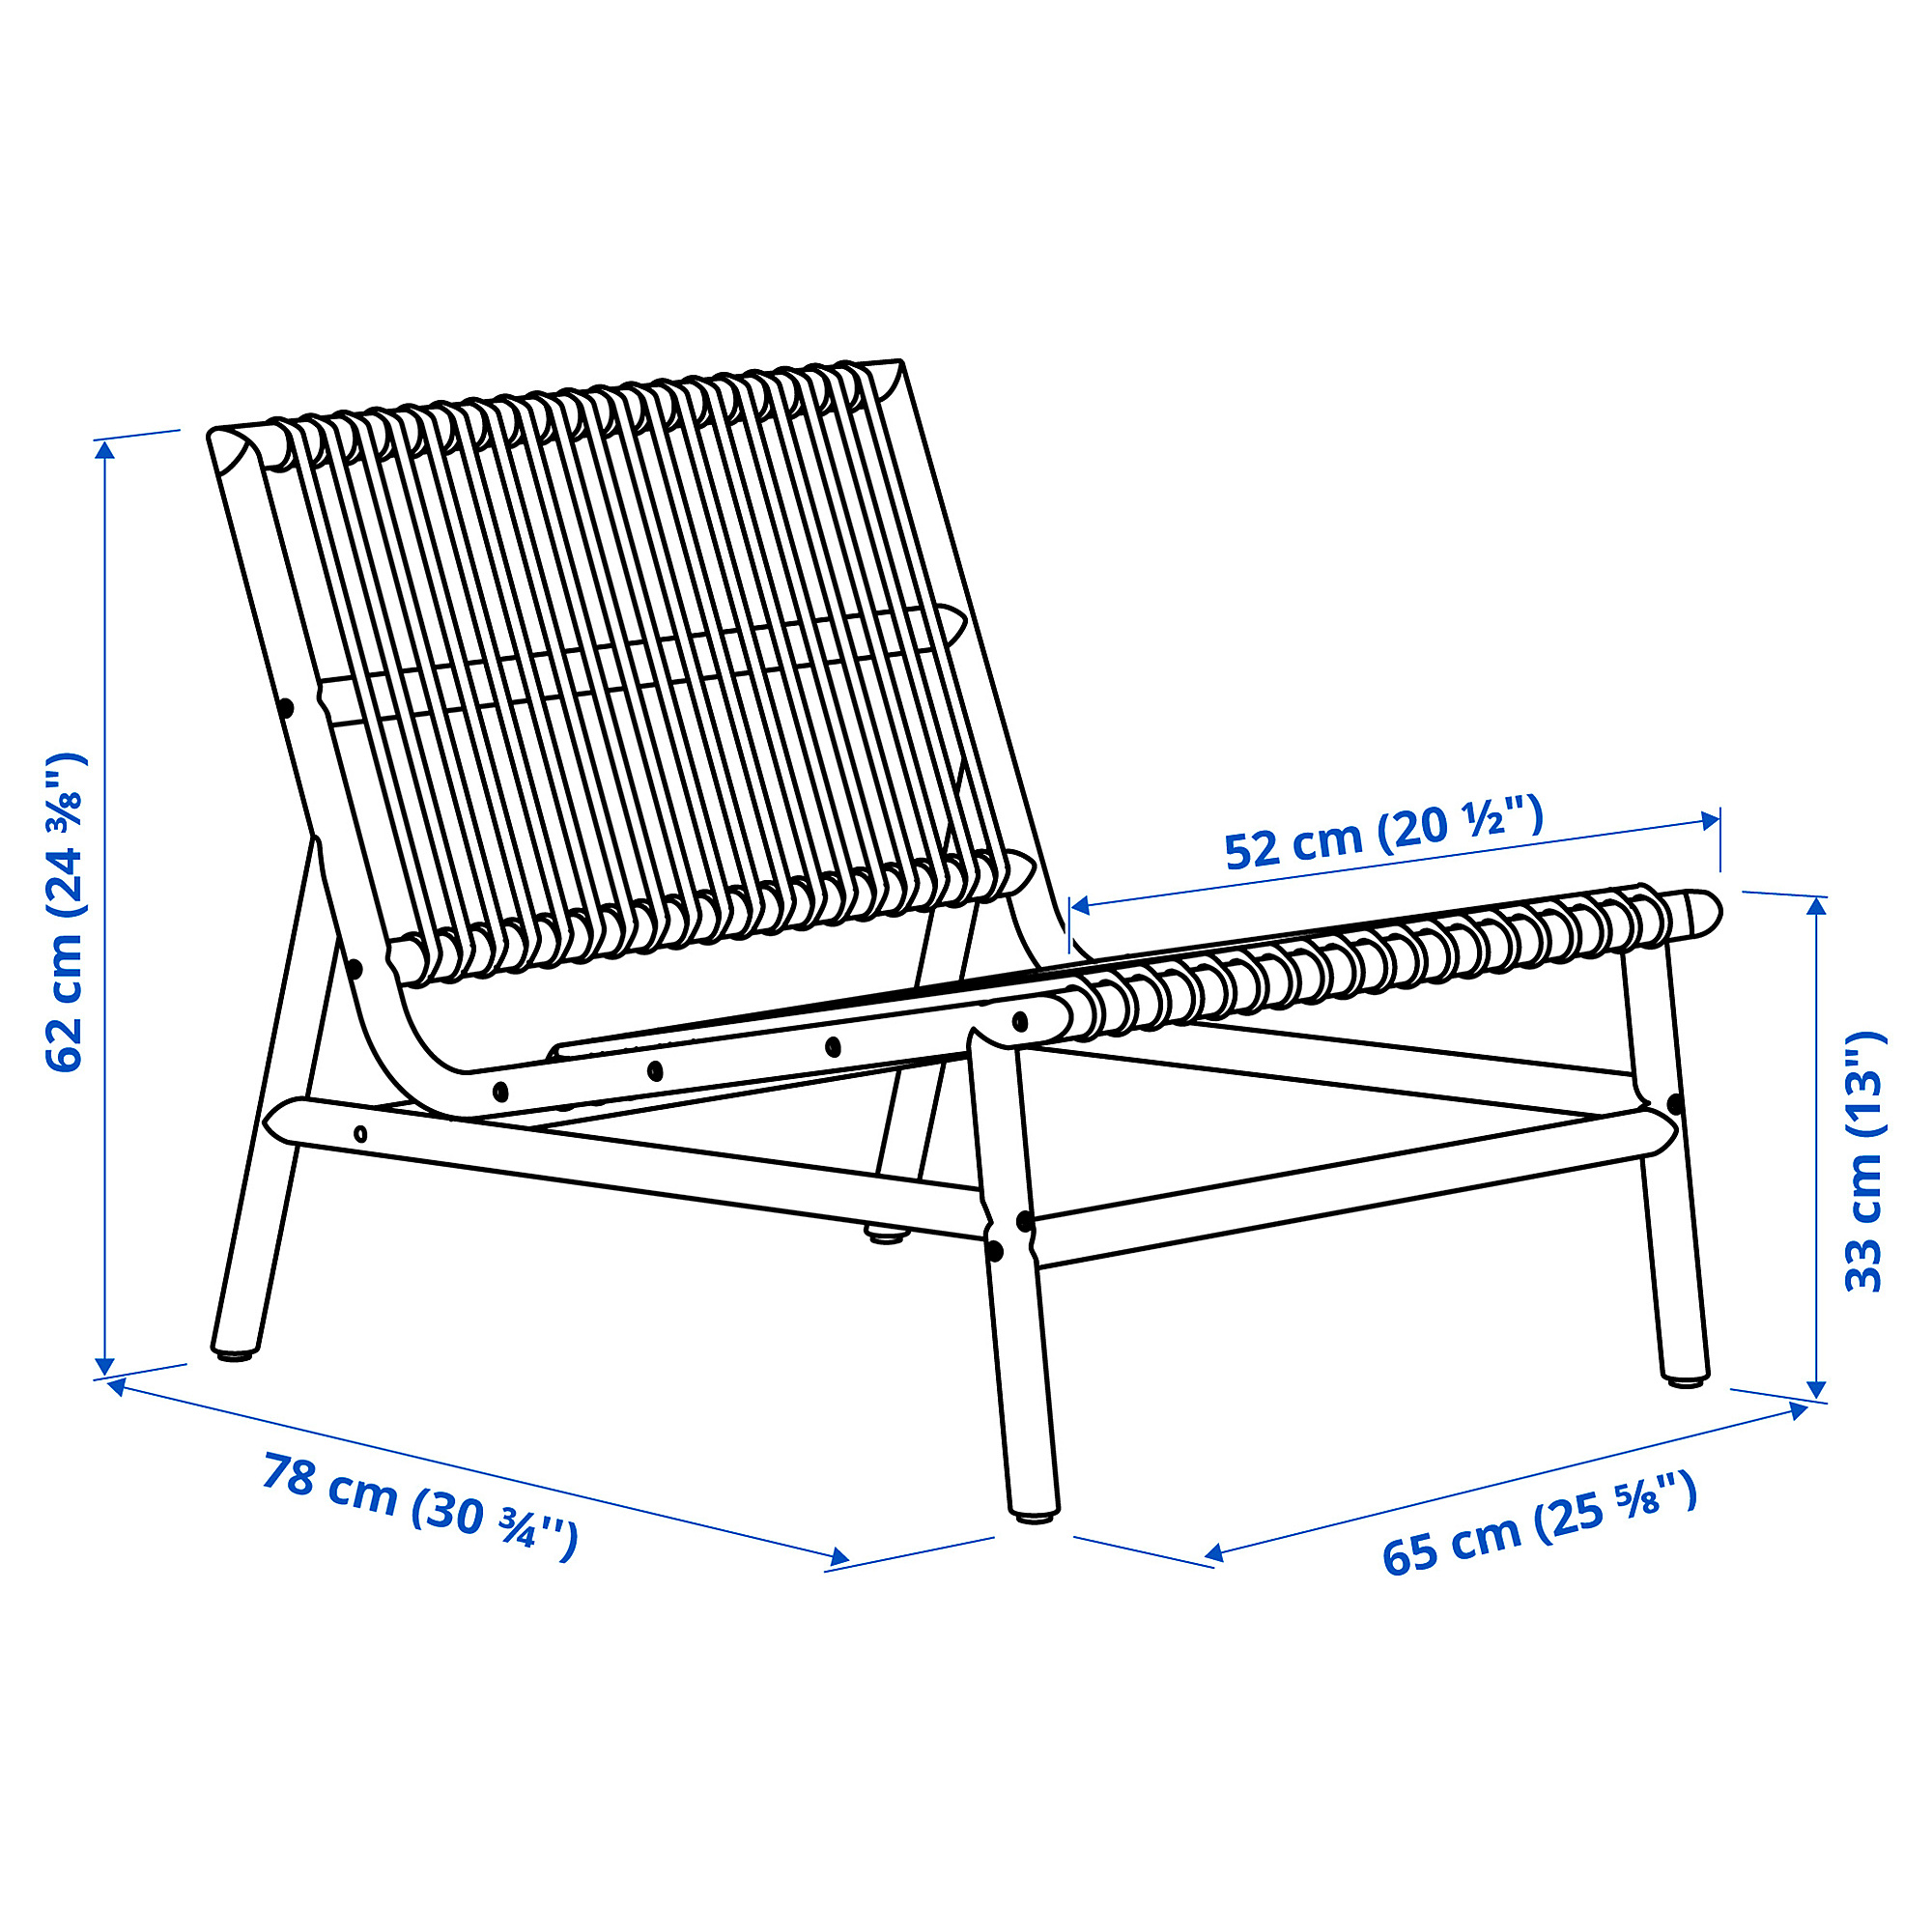 TVARÖ seat sec for modular sofa, outdoor